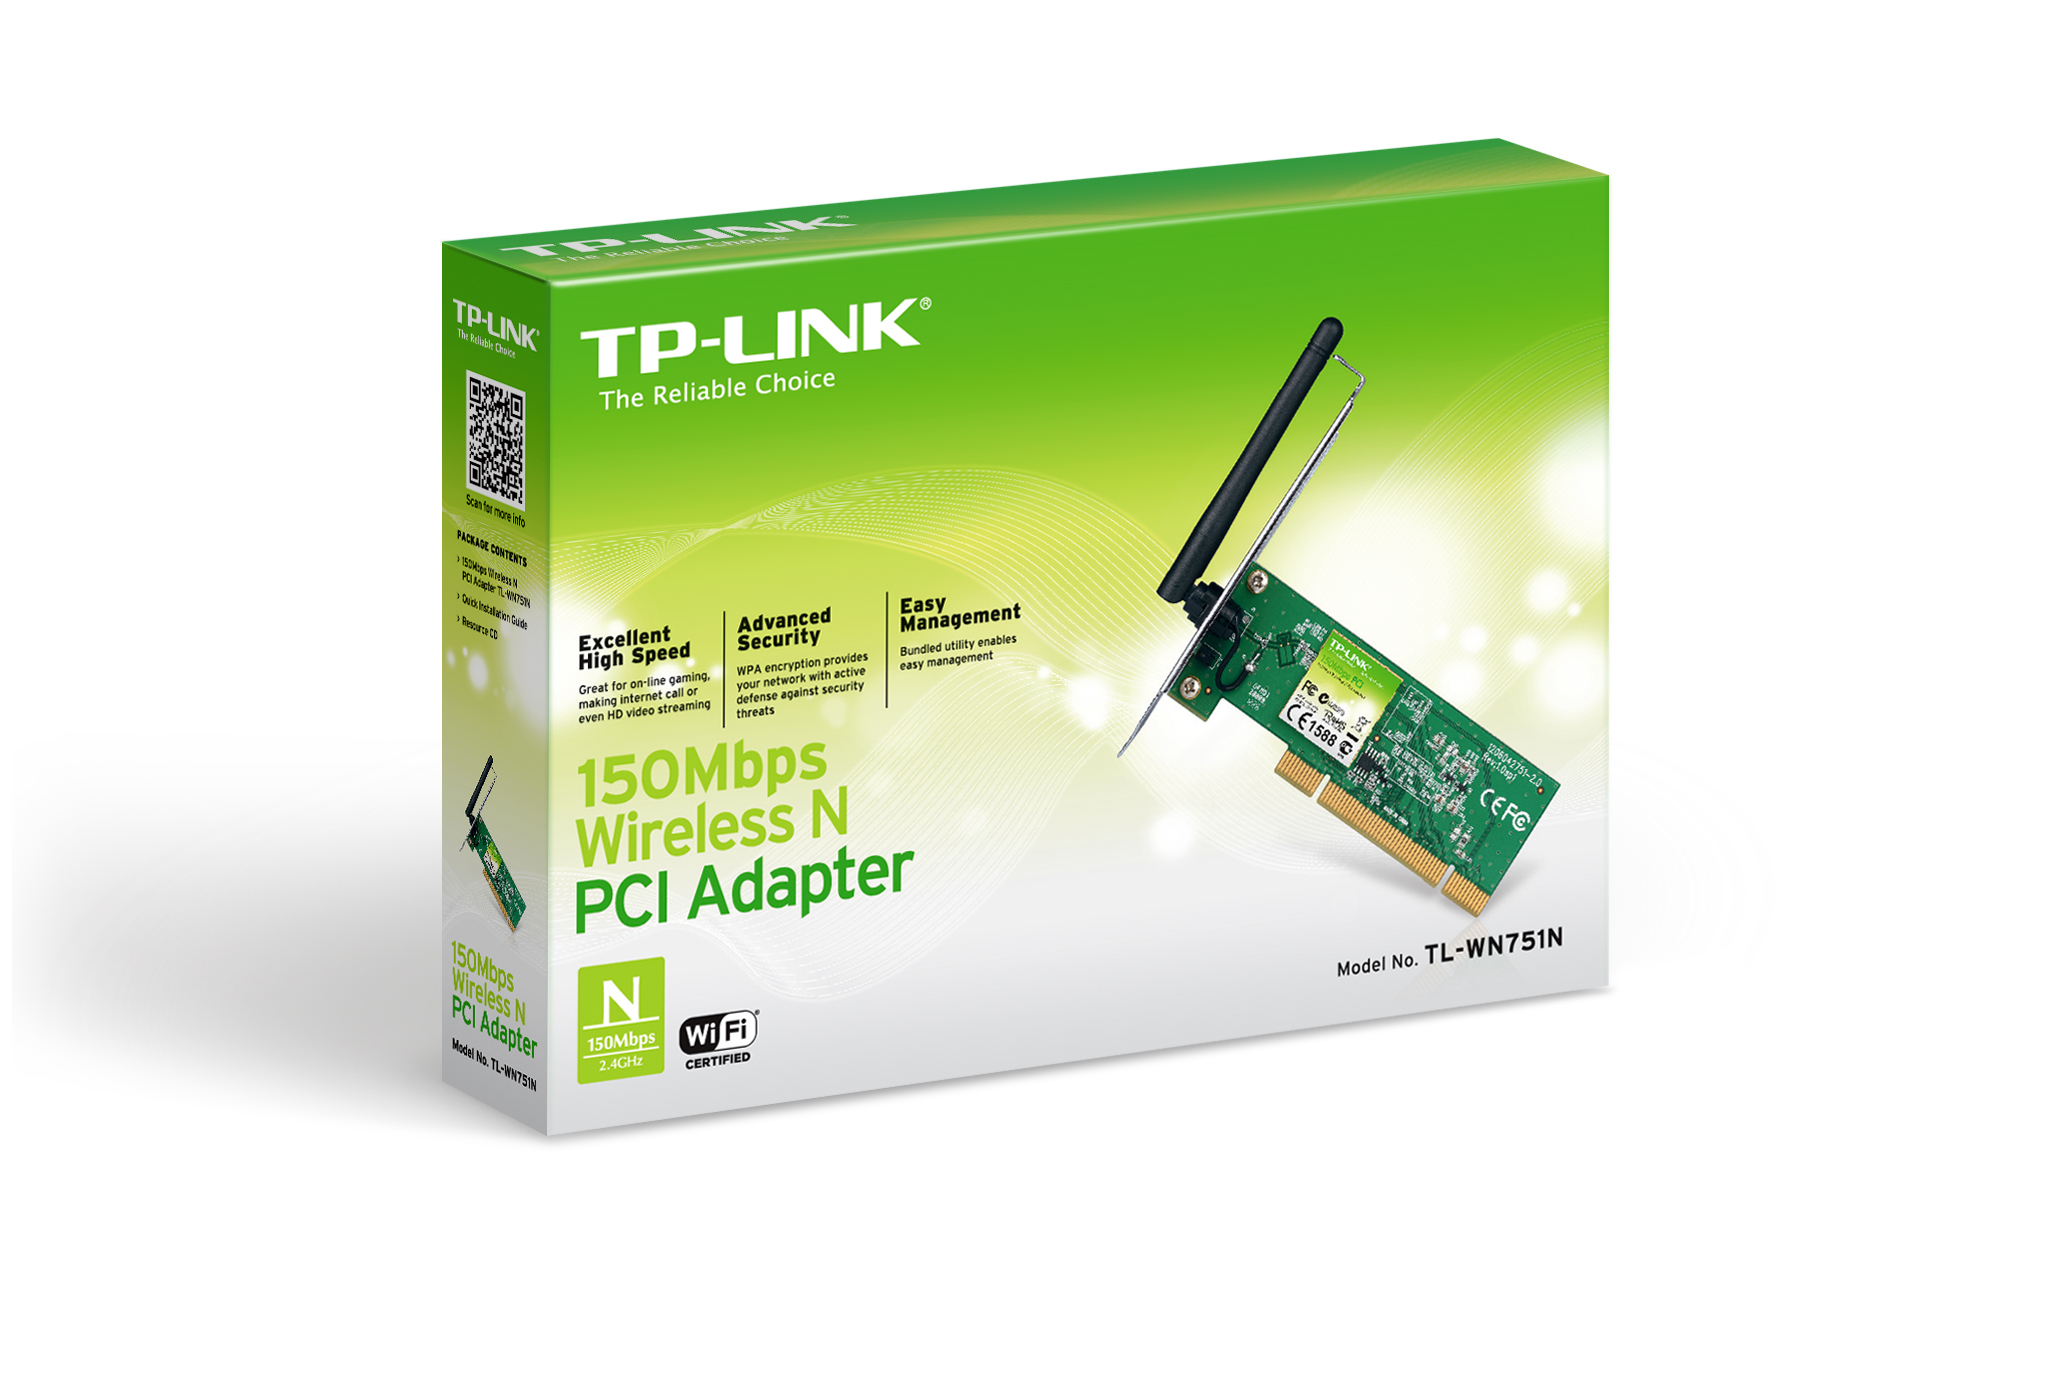 Wireless N PCI Adapter TP-Link TL-WN751N